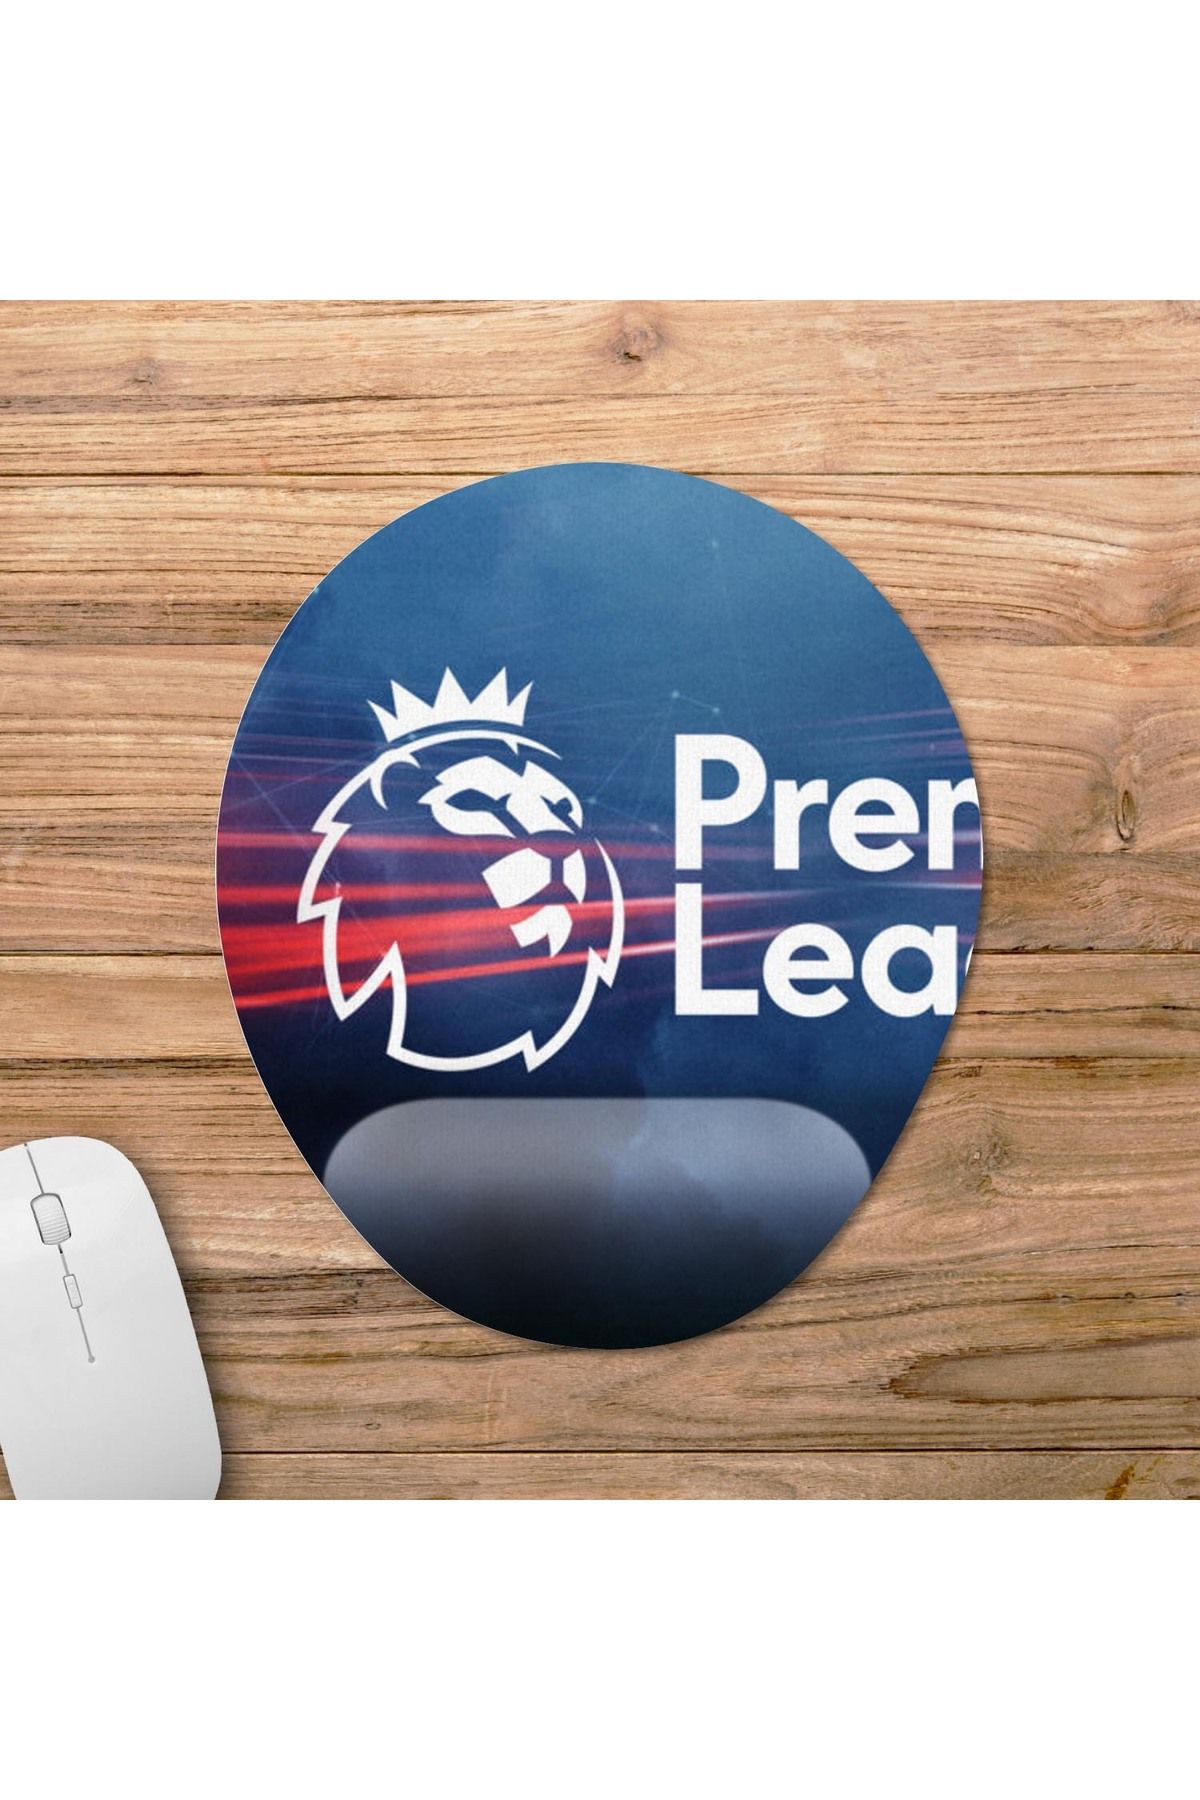 Pixxa Premier League - İngiltere Futbol Ligi Bilek Destekli Mousepad Model - 4 Oval